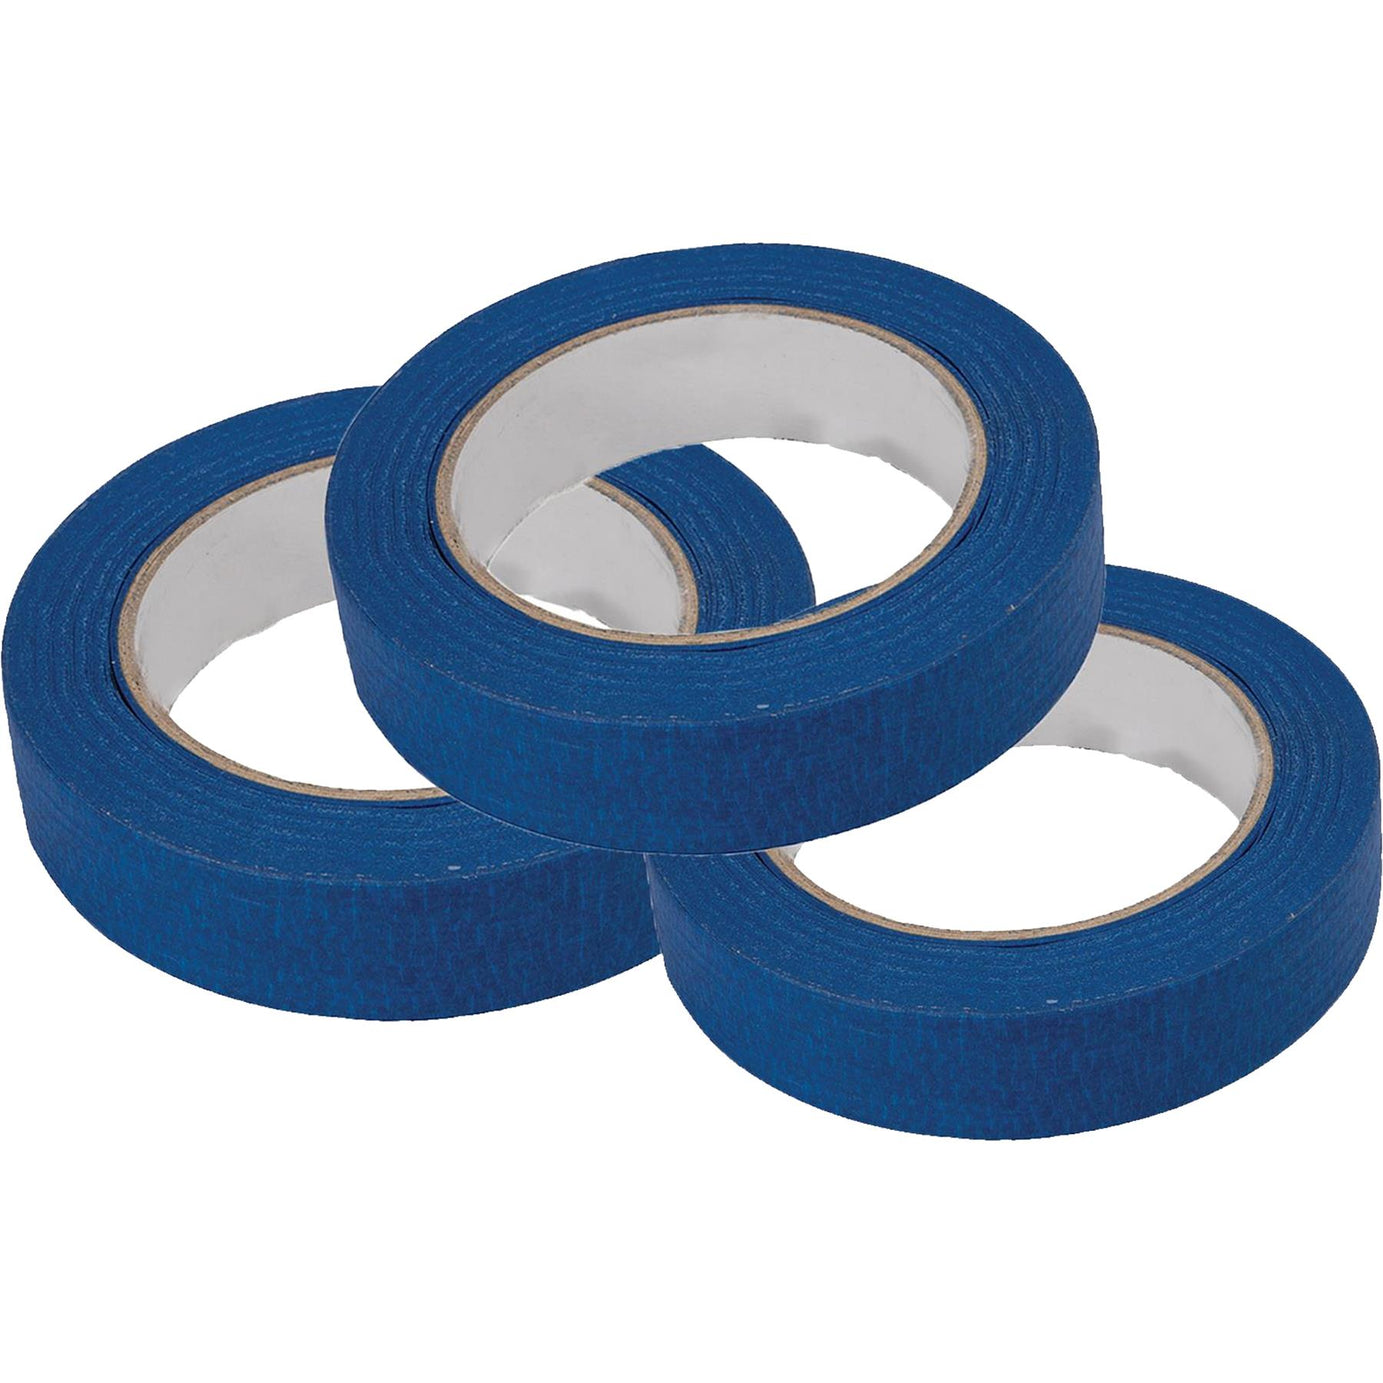 Blue Masking Tape Clean Peel UV Resistant Painters/Decorators 24mm x 50m 3 Rolls